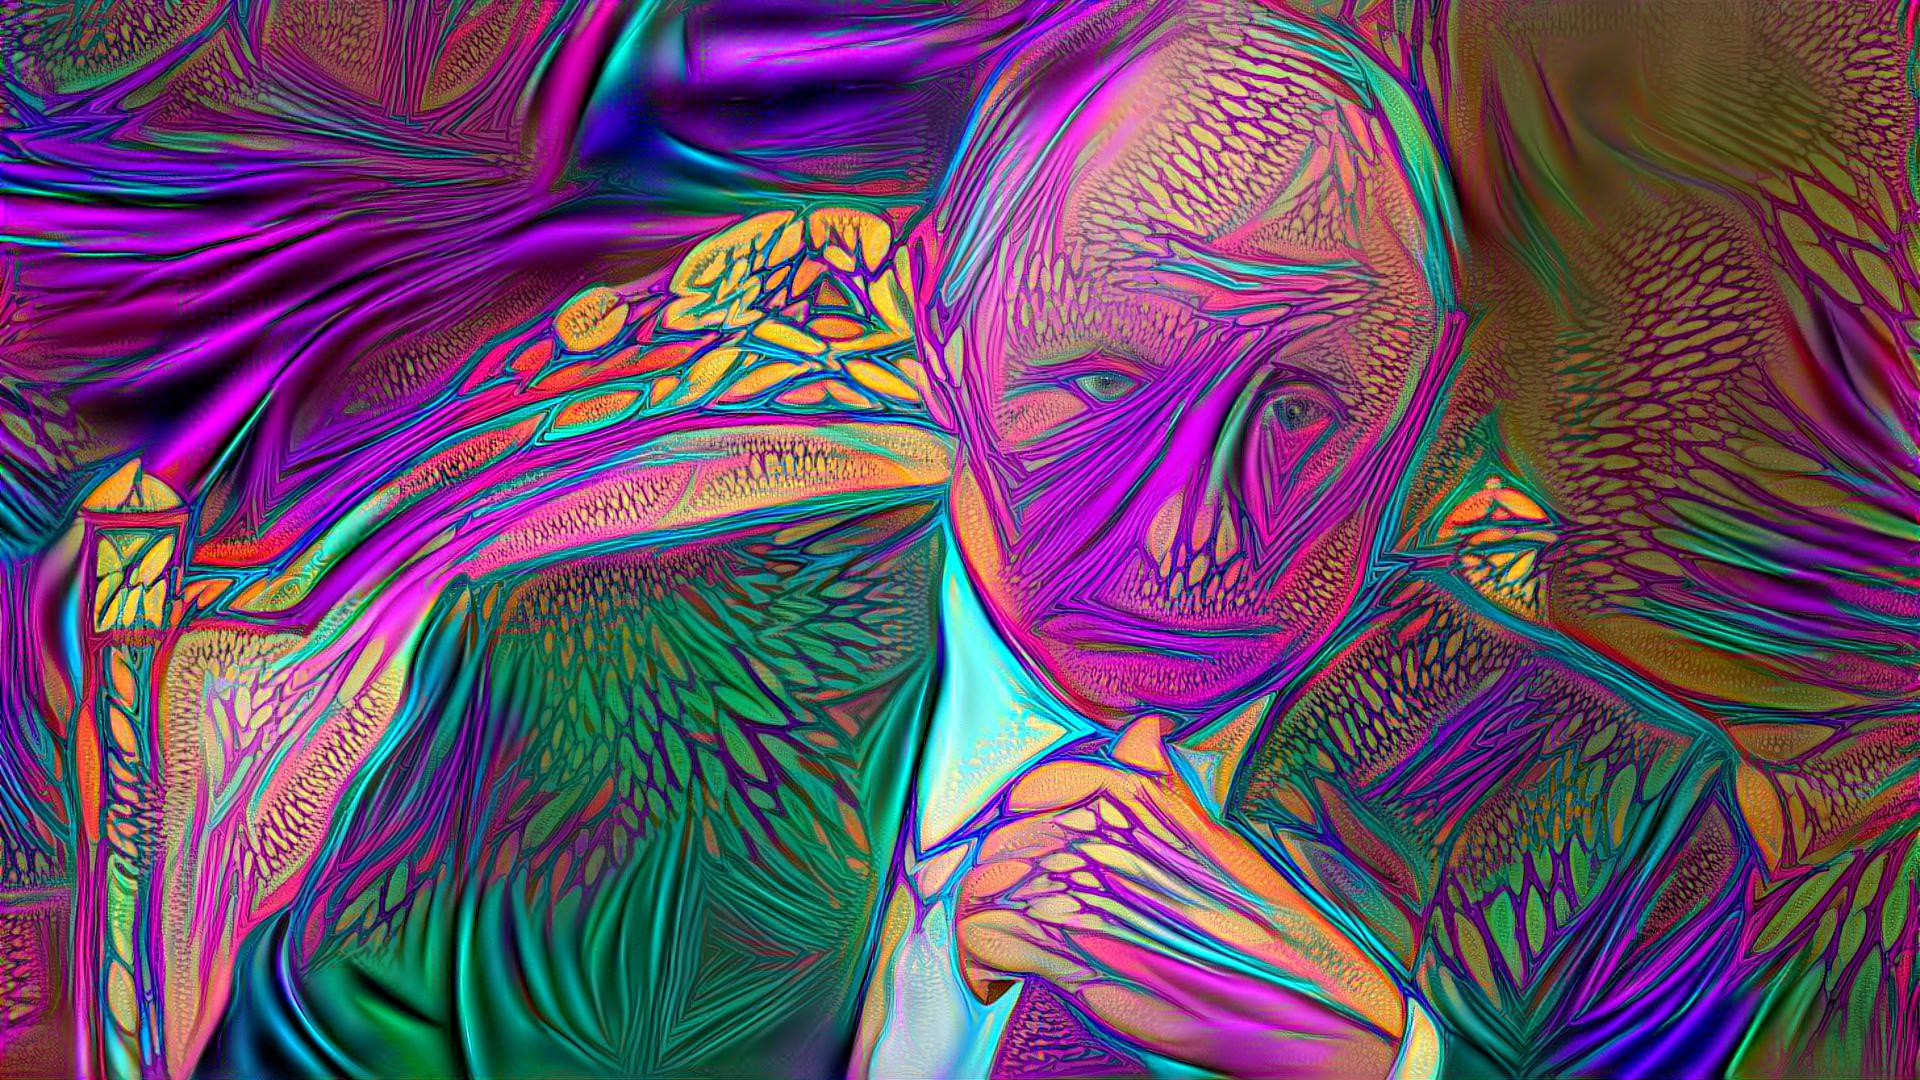 Putin IV